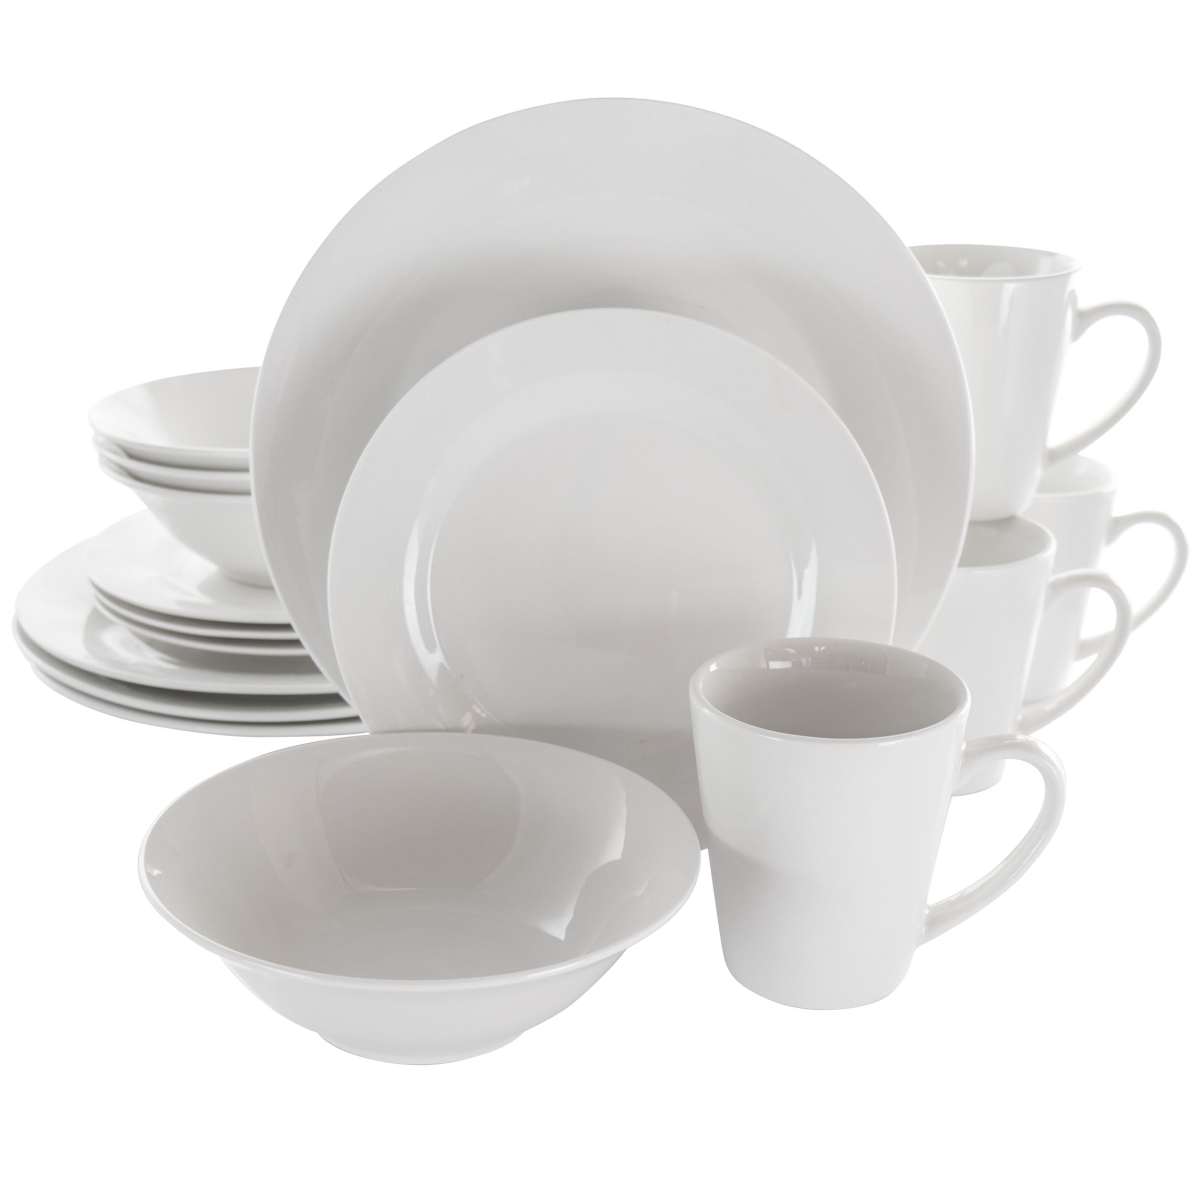 Picture of Elama EL-MARSHALL 16 Piece Marshall Porcelain Dinnerware Set, White